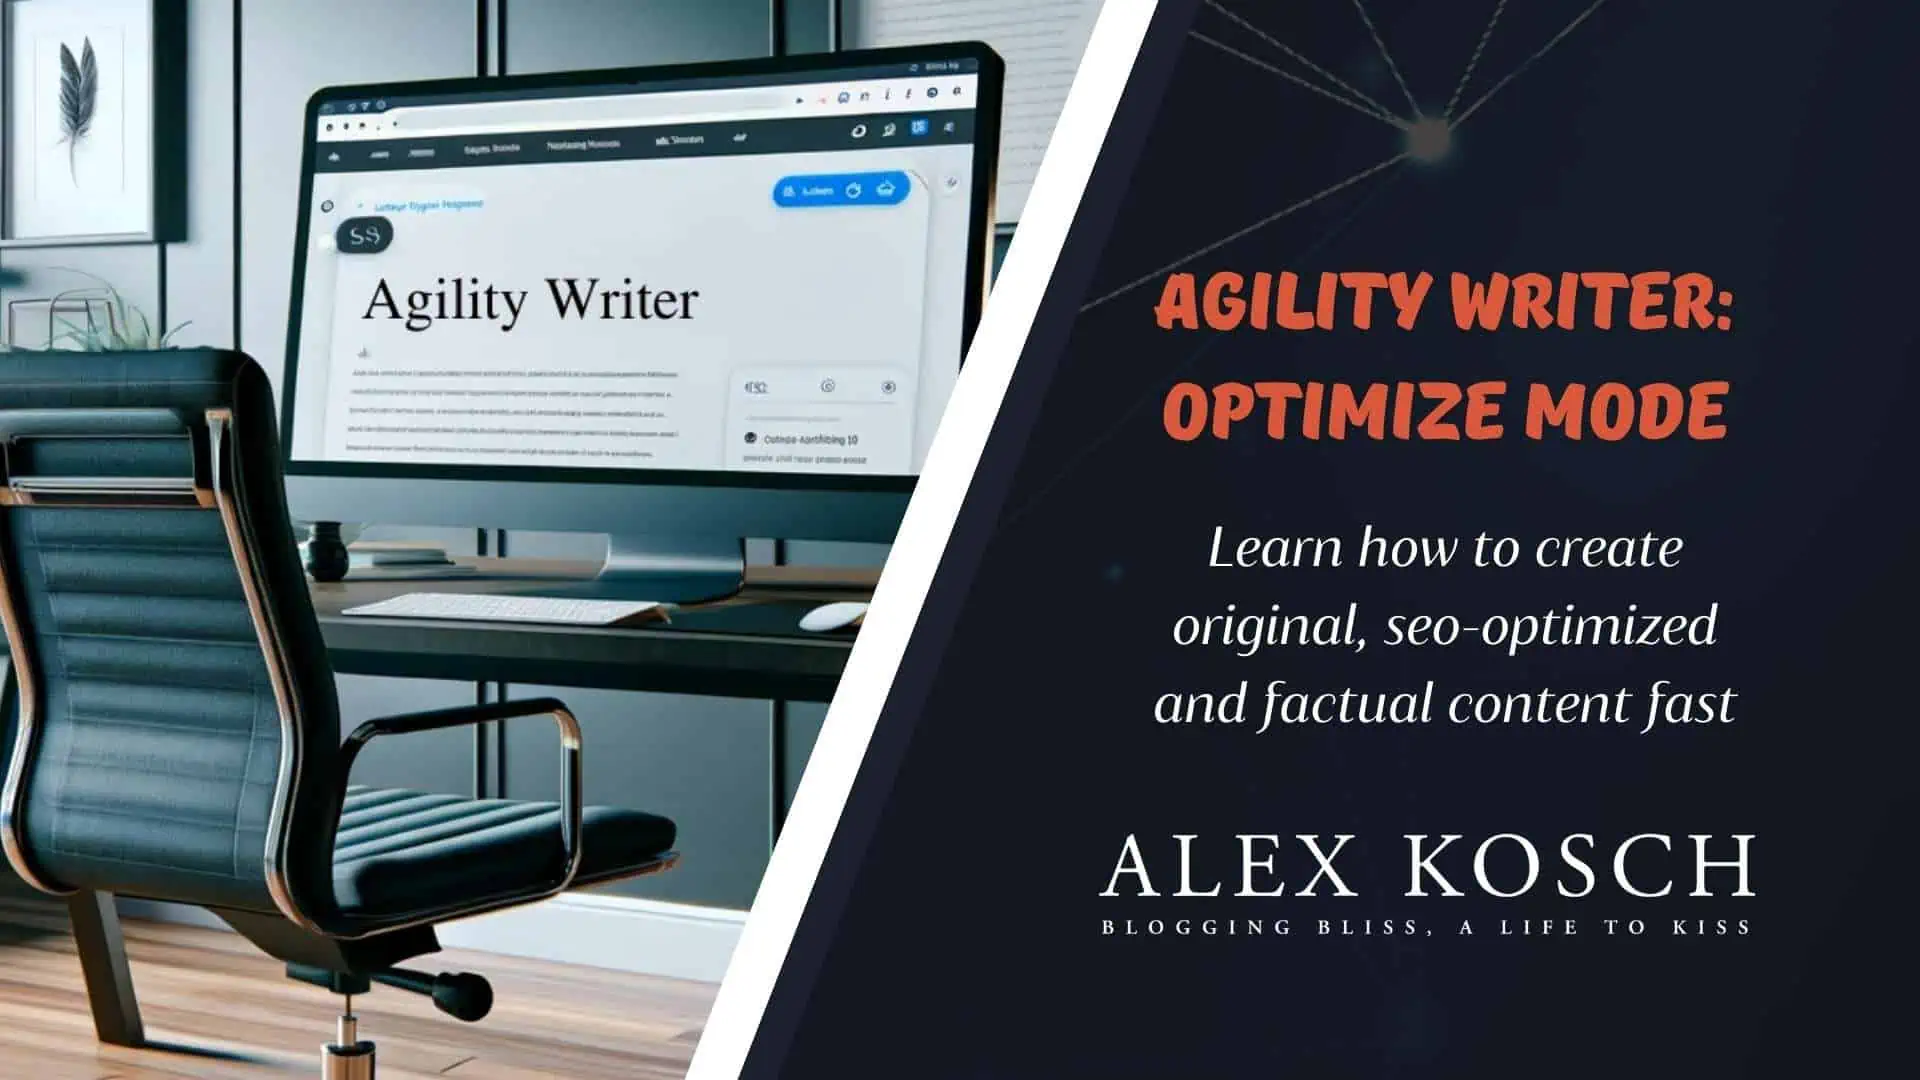 Agility Writer optimize mode